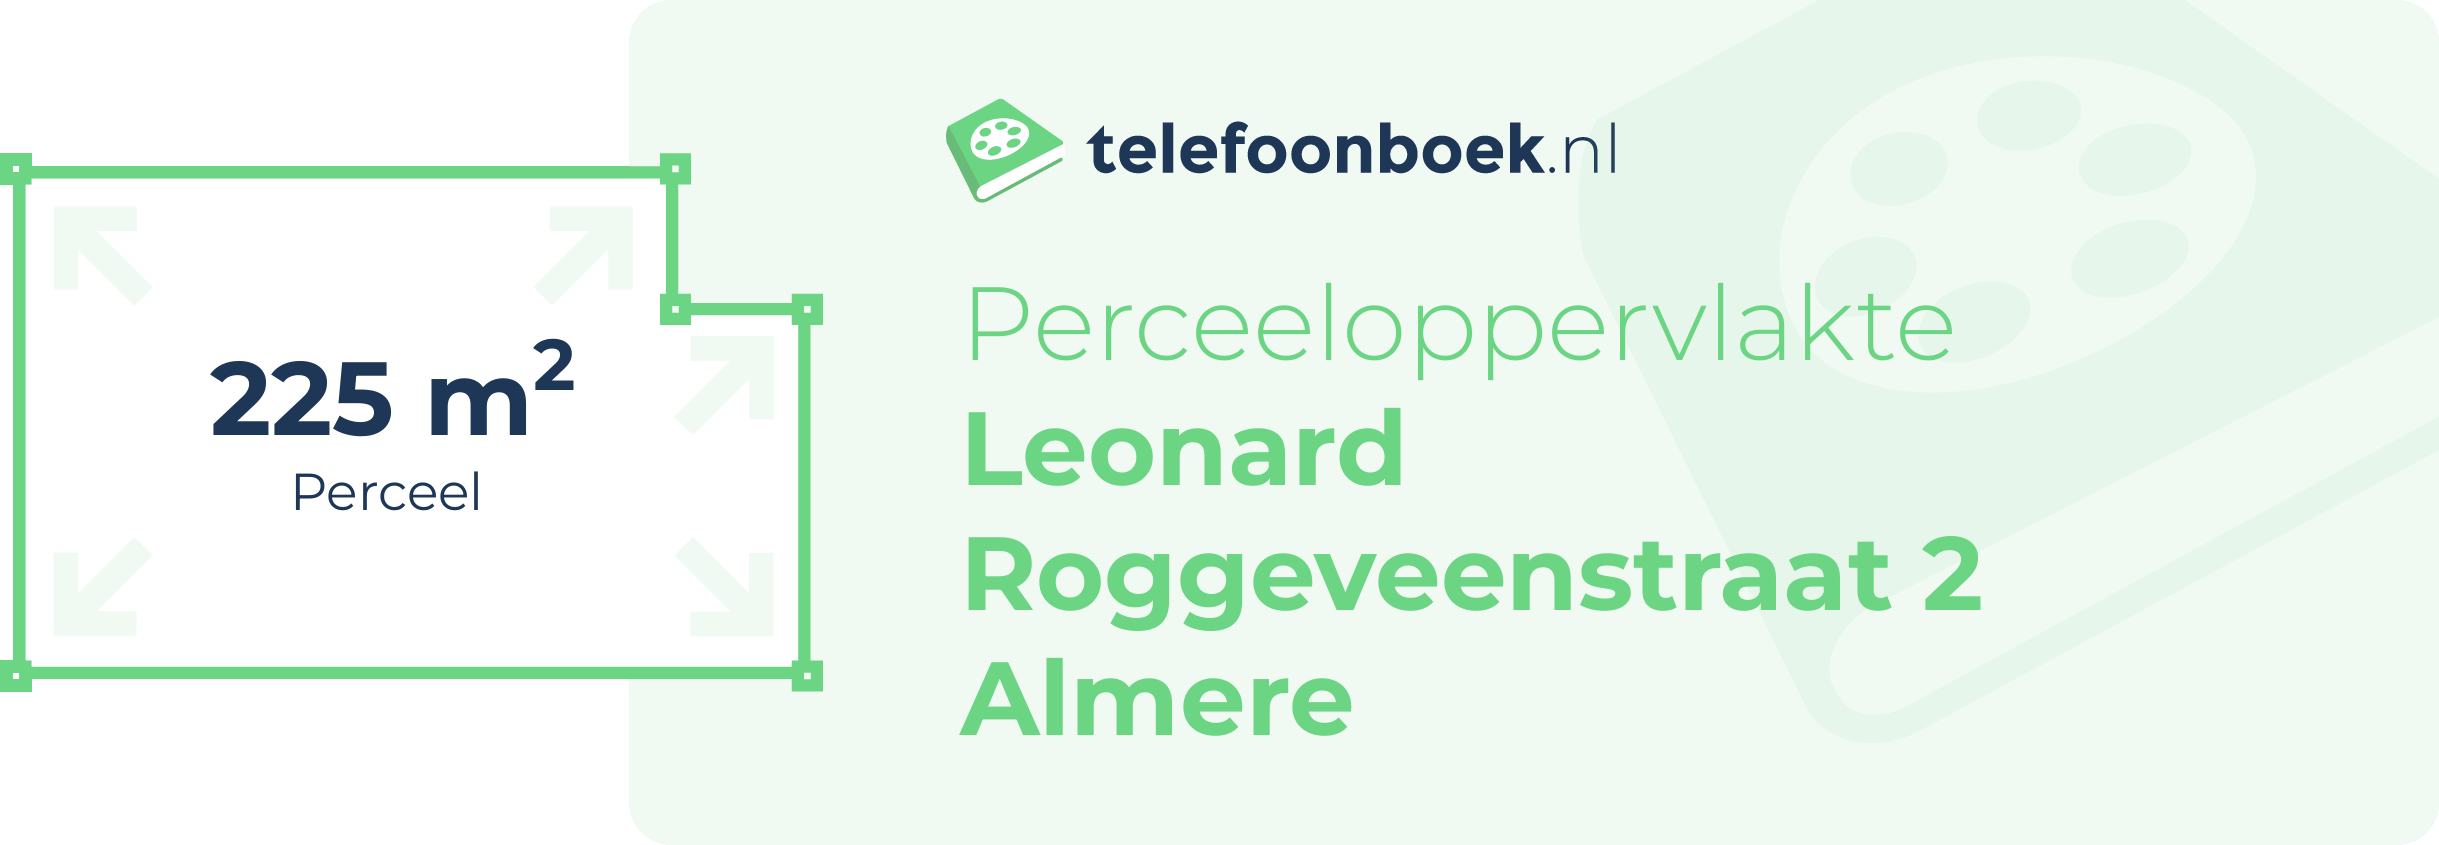 Perceeloppervlakte Leonard Roggeveenstraat 2 Almere